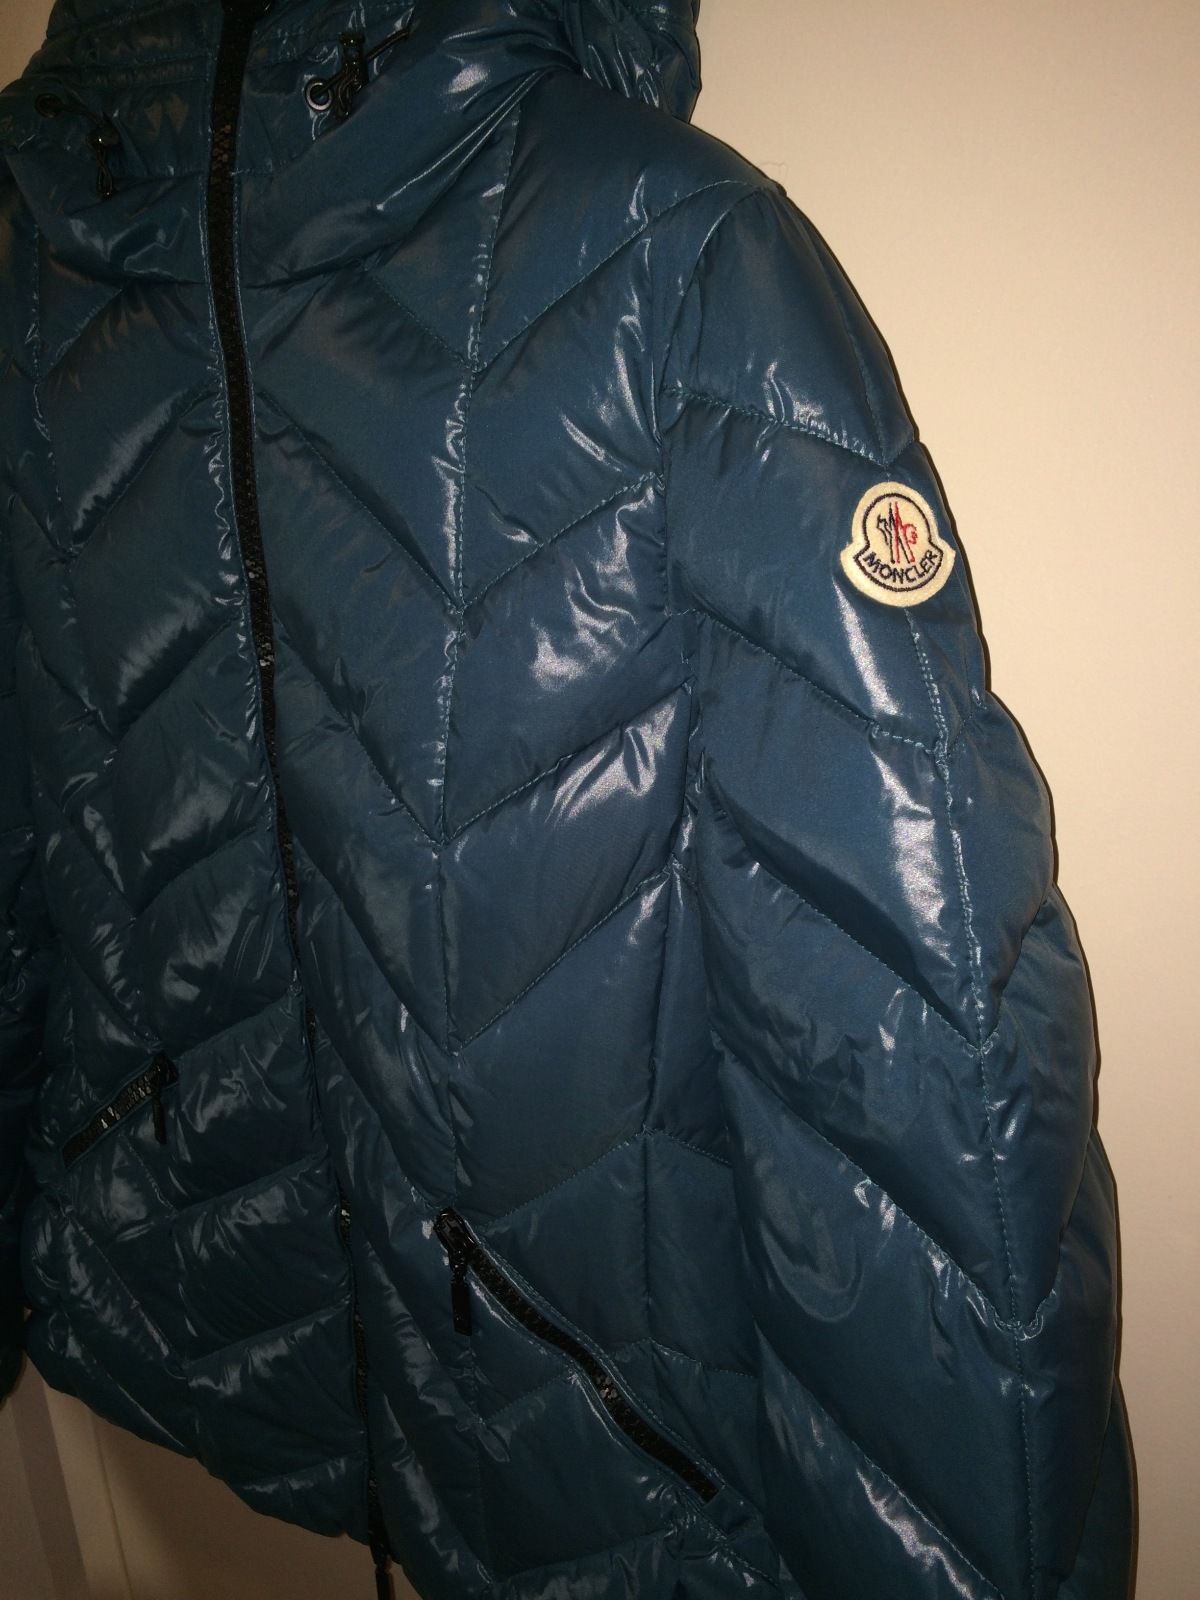 Moncler-Badette-2014-Women-Jacket-with-hood-sz-4-green-retails-1240